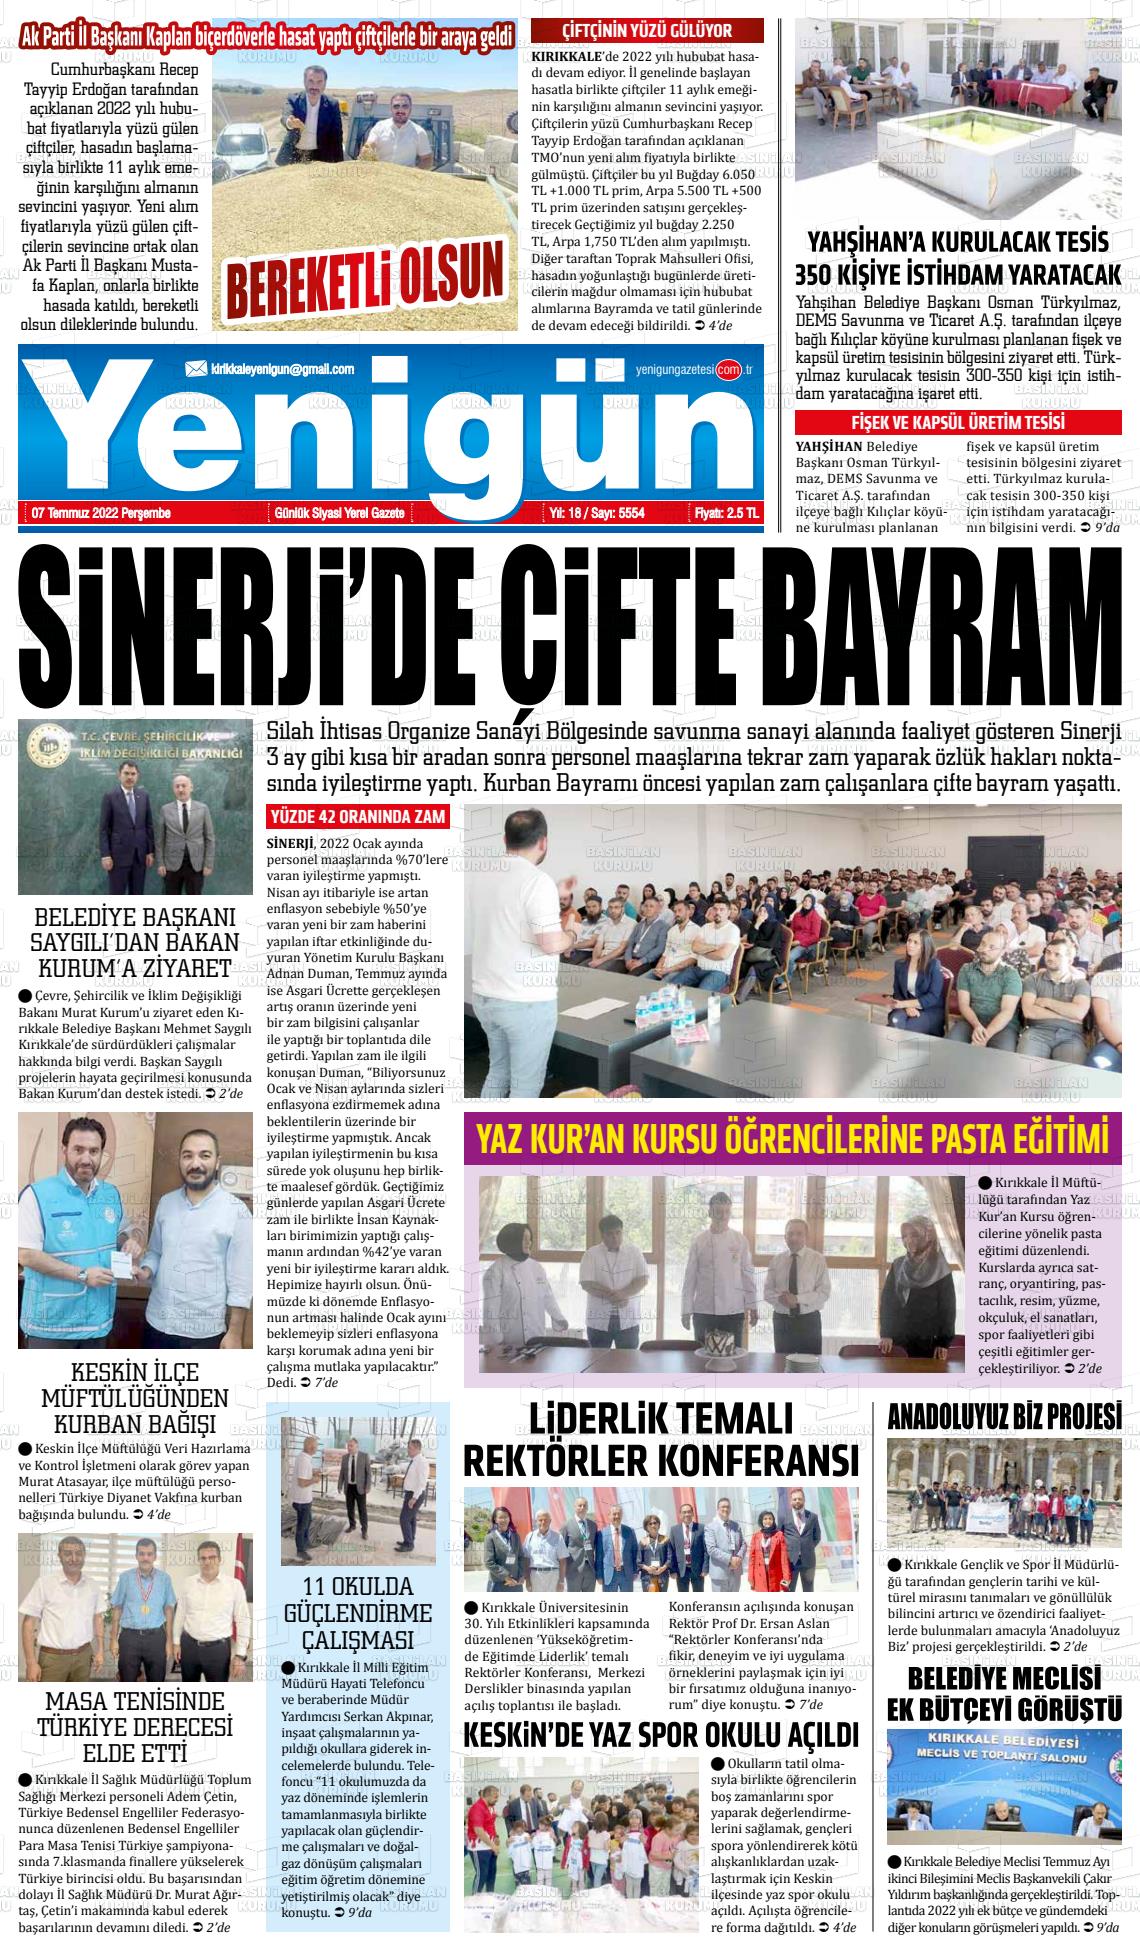 07 Temmuz 2022 Yenigün Gazete Manşeti